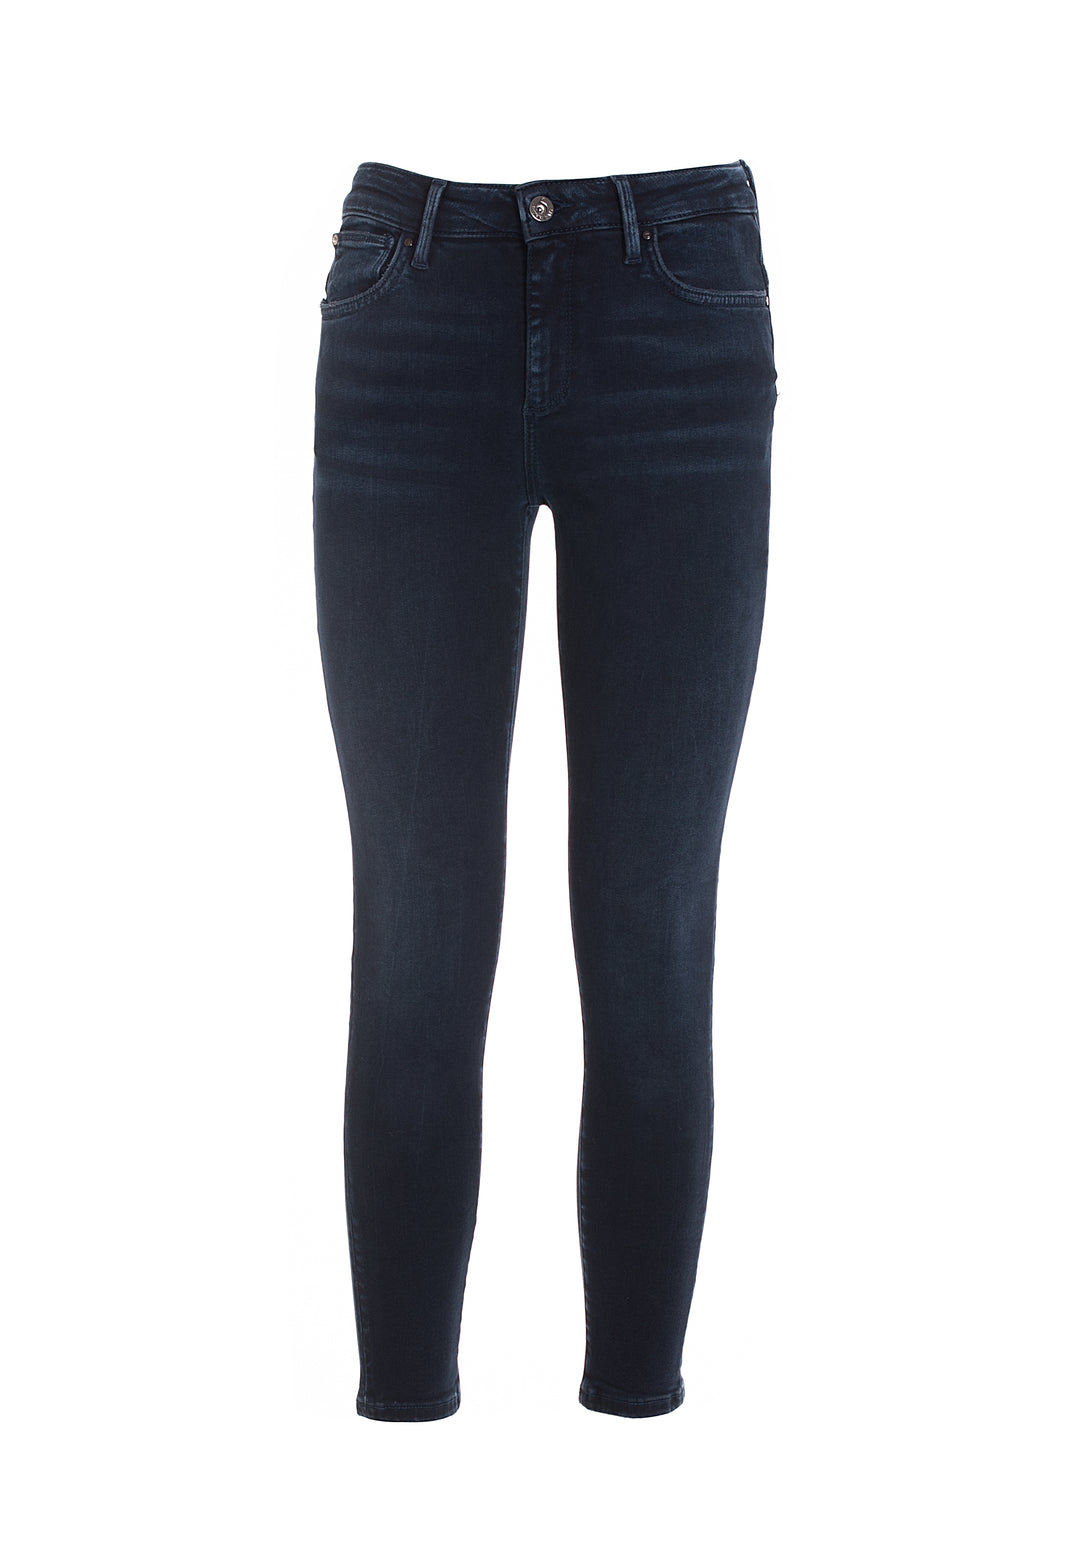 Jeans skinny effetto shape up in denim con lavaggio scuro-FRACOMINA-FP22WV8016D40493-800-JN-24